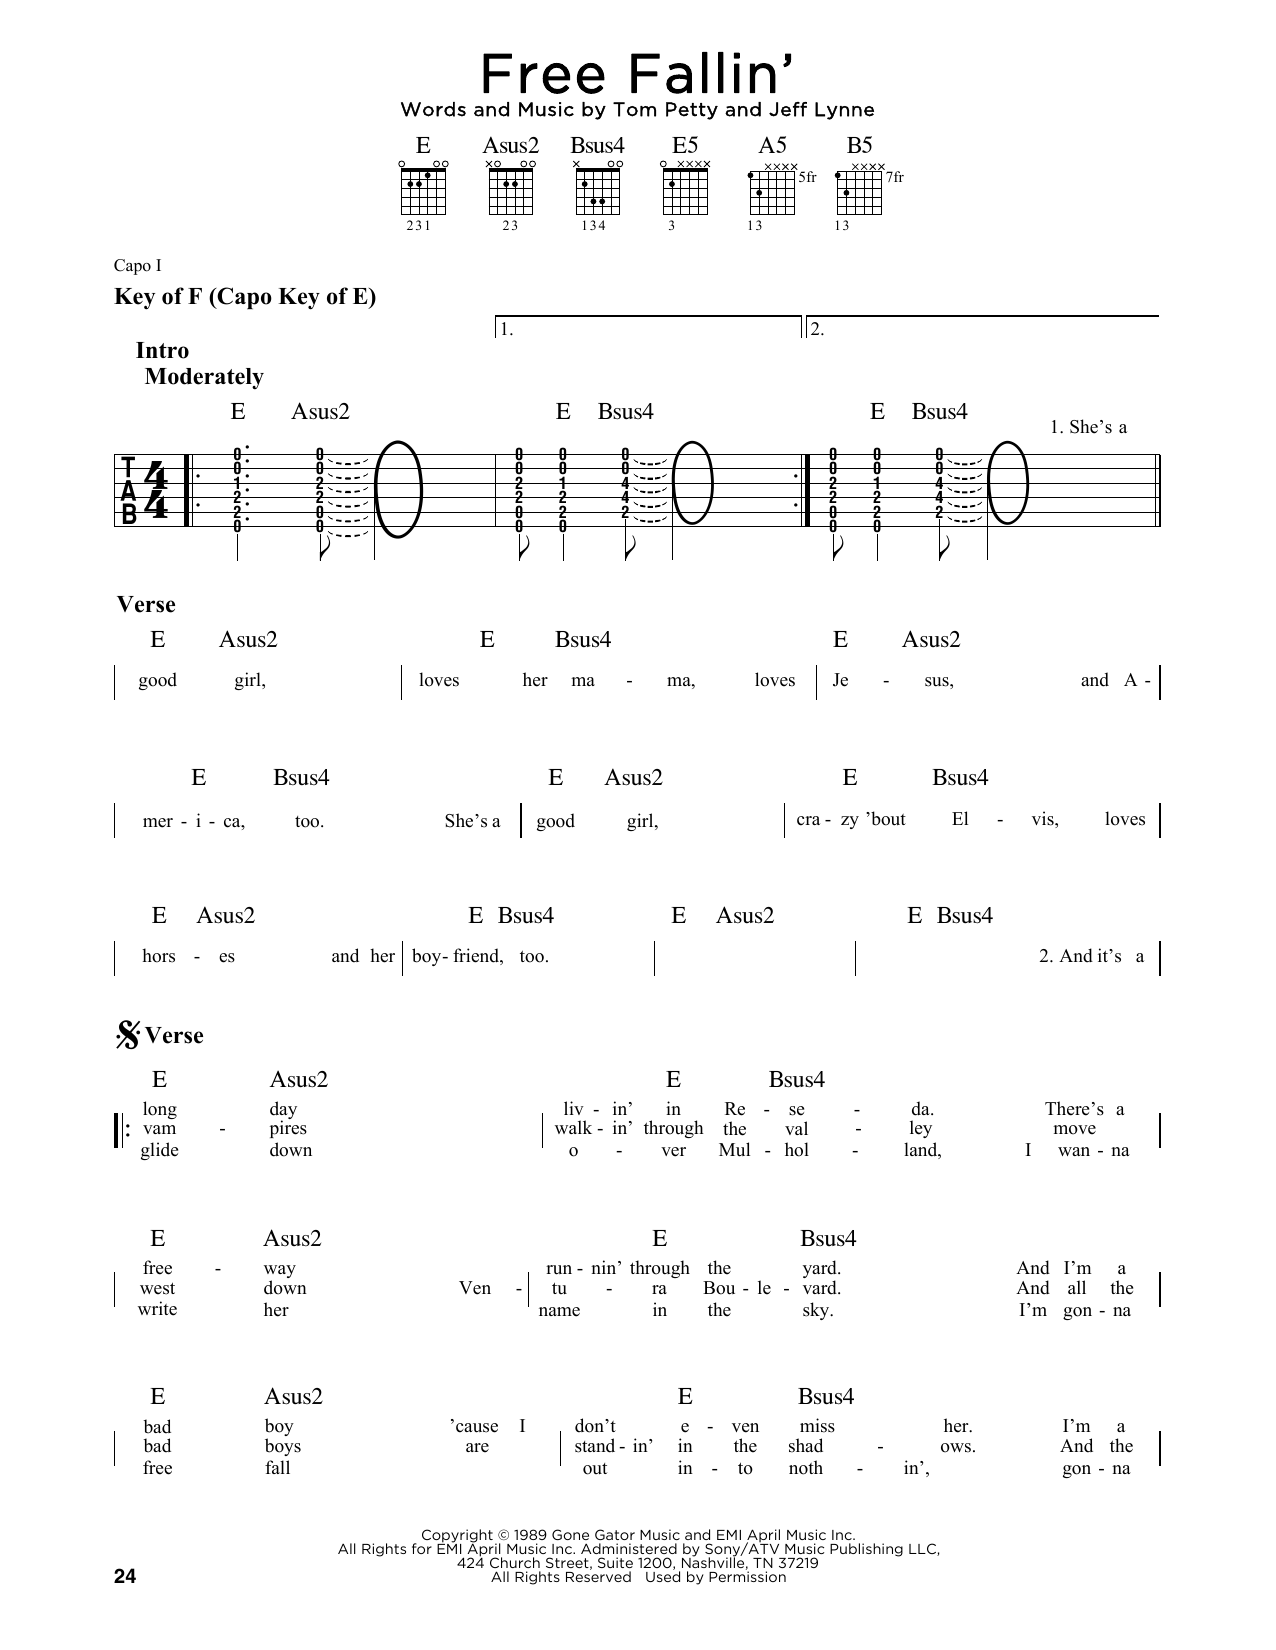 Download Tom Petty Free Fallin' Sheet Music